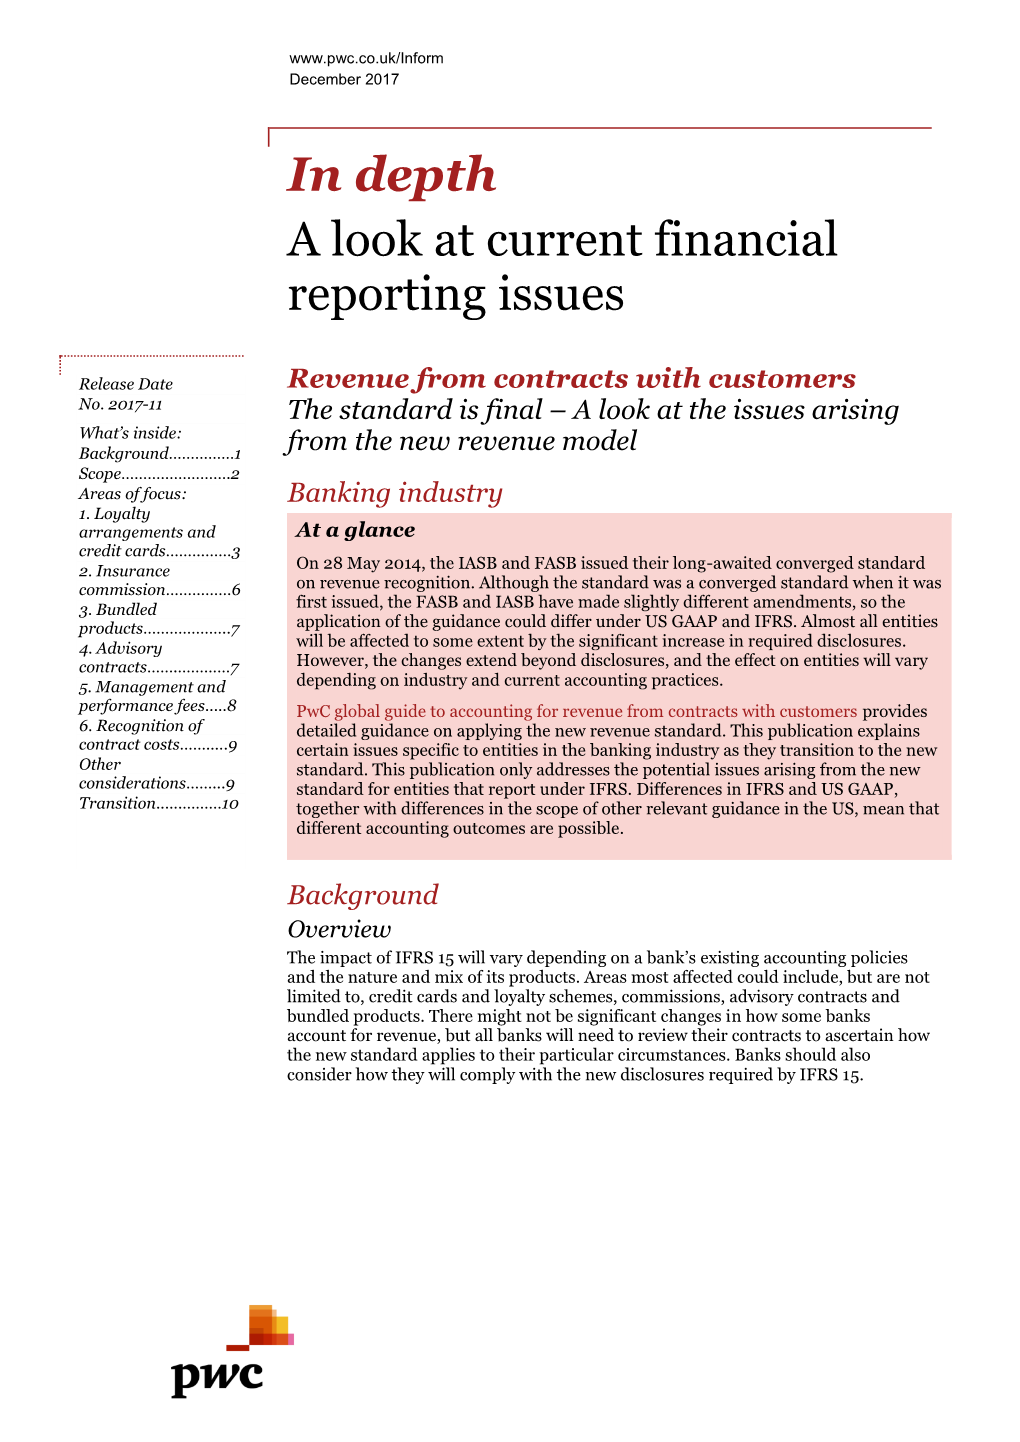 In Depth IFRS 15 Industry Supplement – Banking